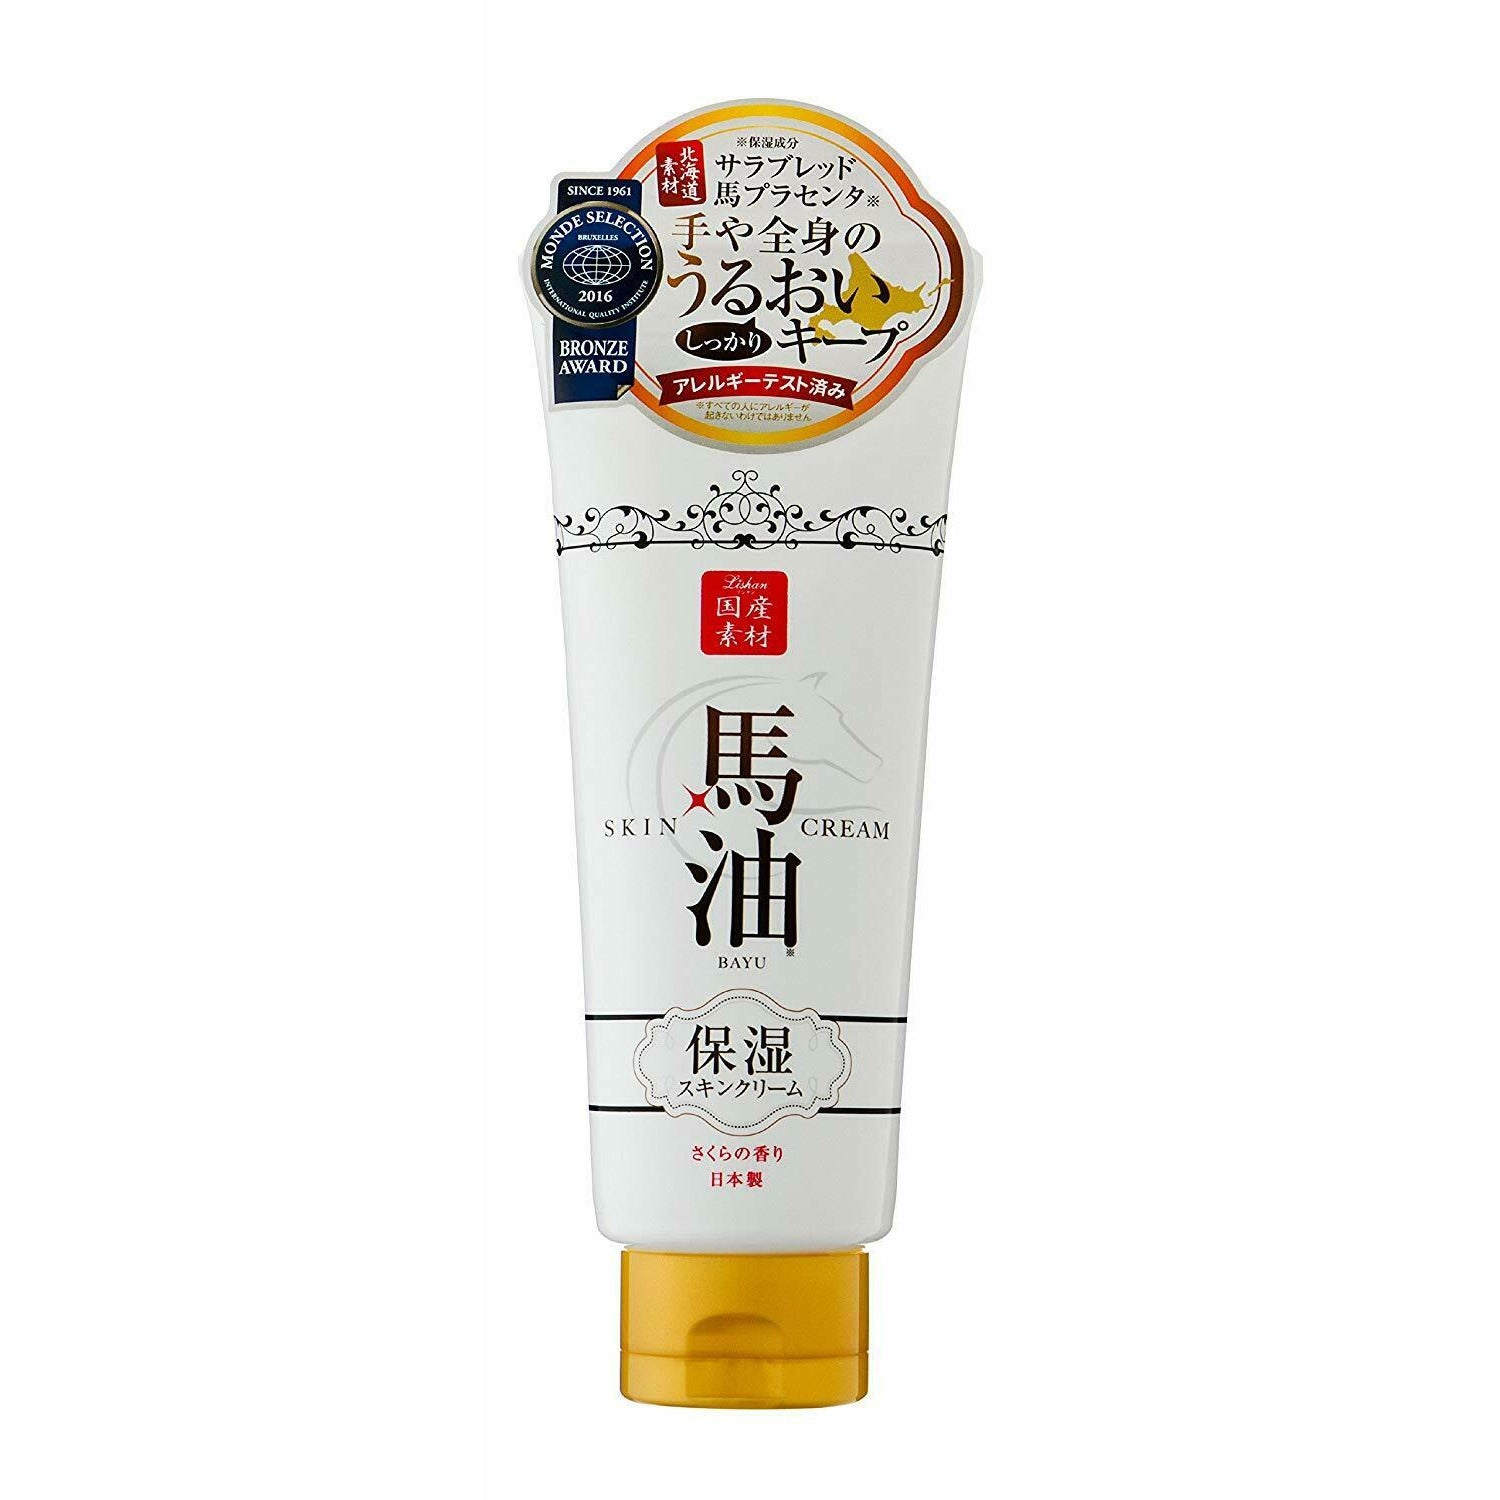 LISHAN Horse Oil/Placenta skin cream 200g 